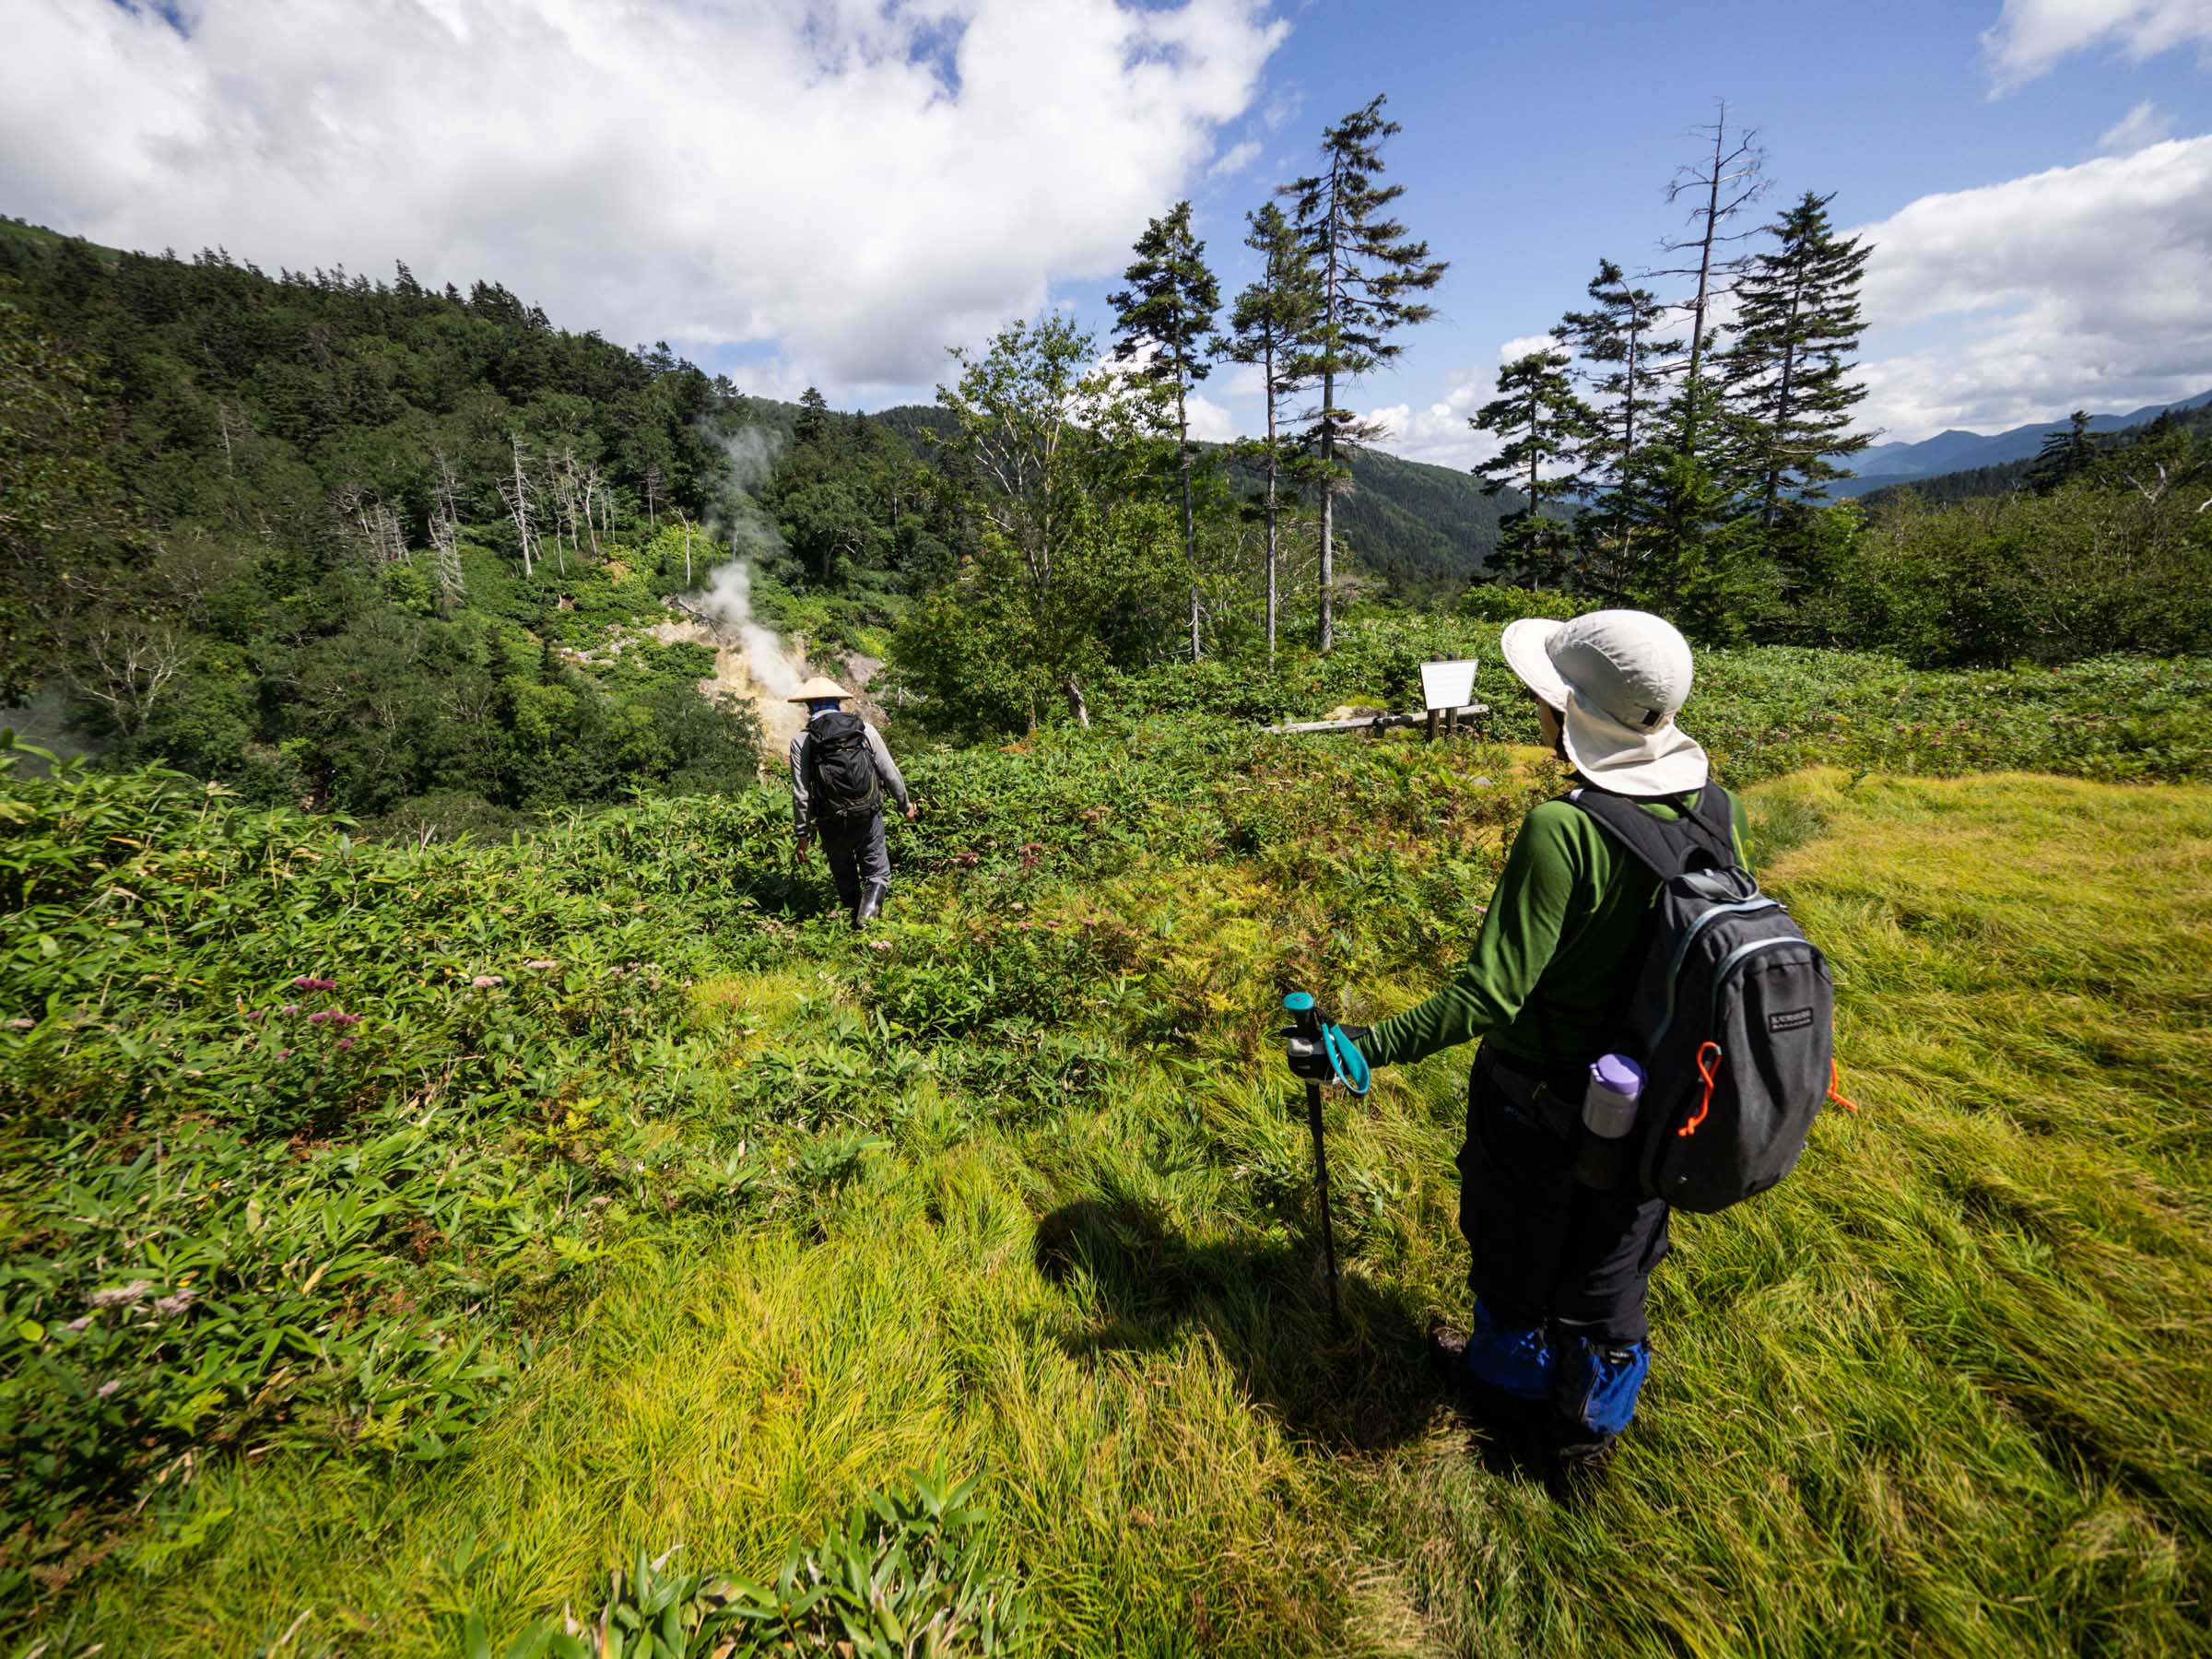 Numameguri Hiking Course (Daisetsu Kogen Onsen, Hokkaido, Japan)